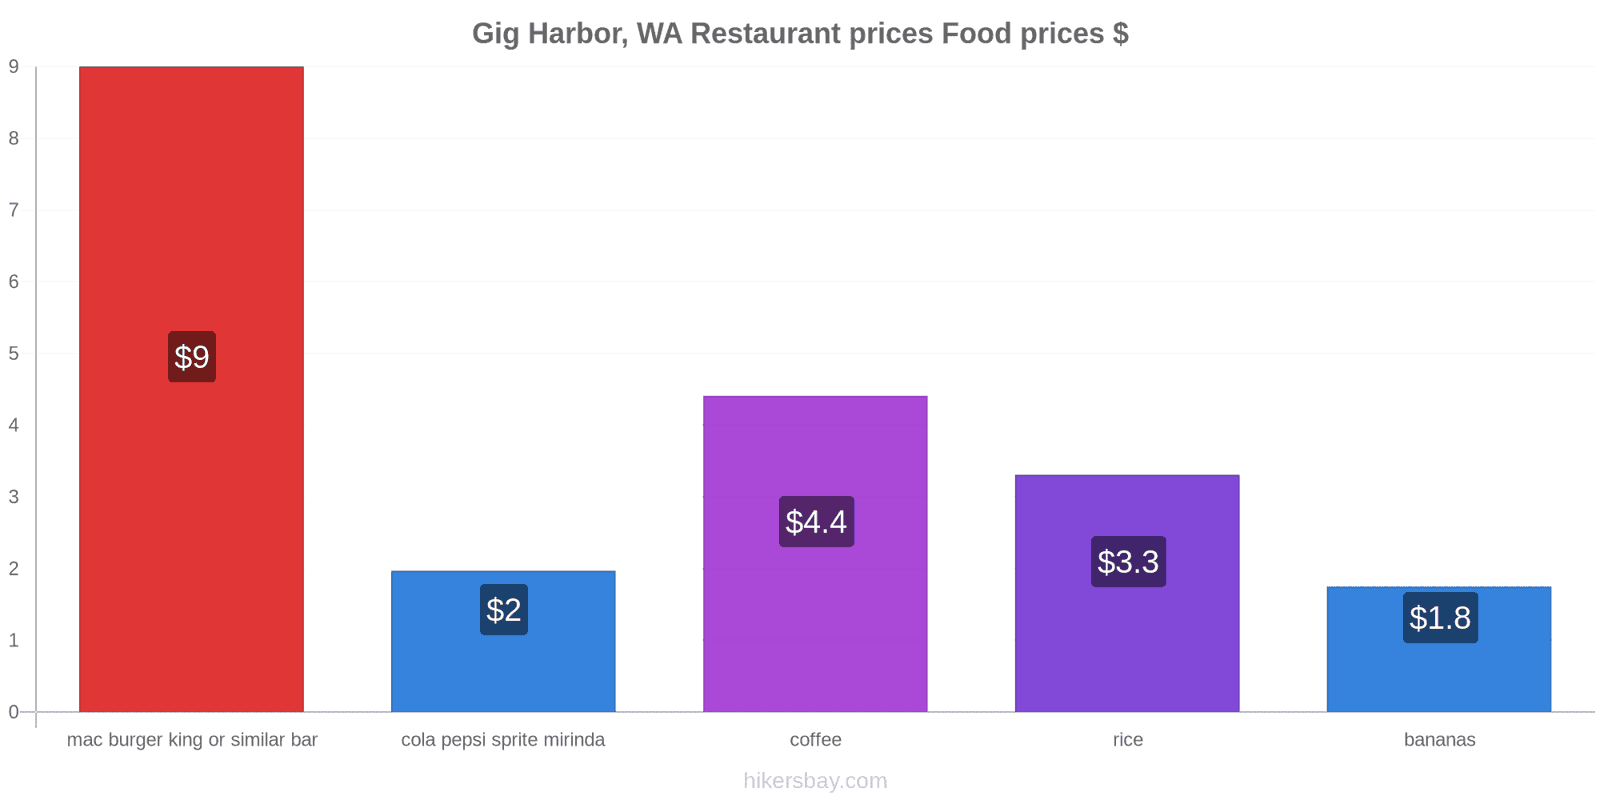 Gig Harbor, WA price changes hikersbay.com